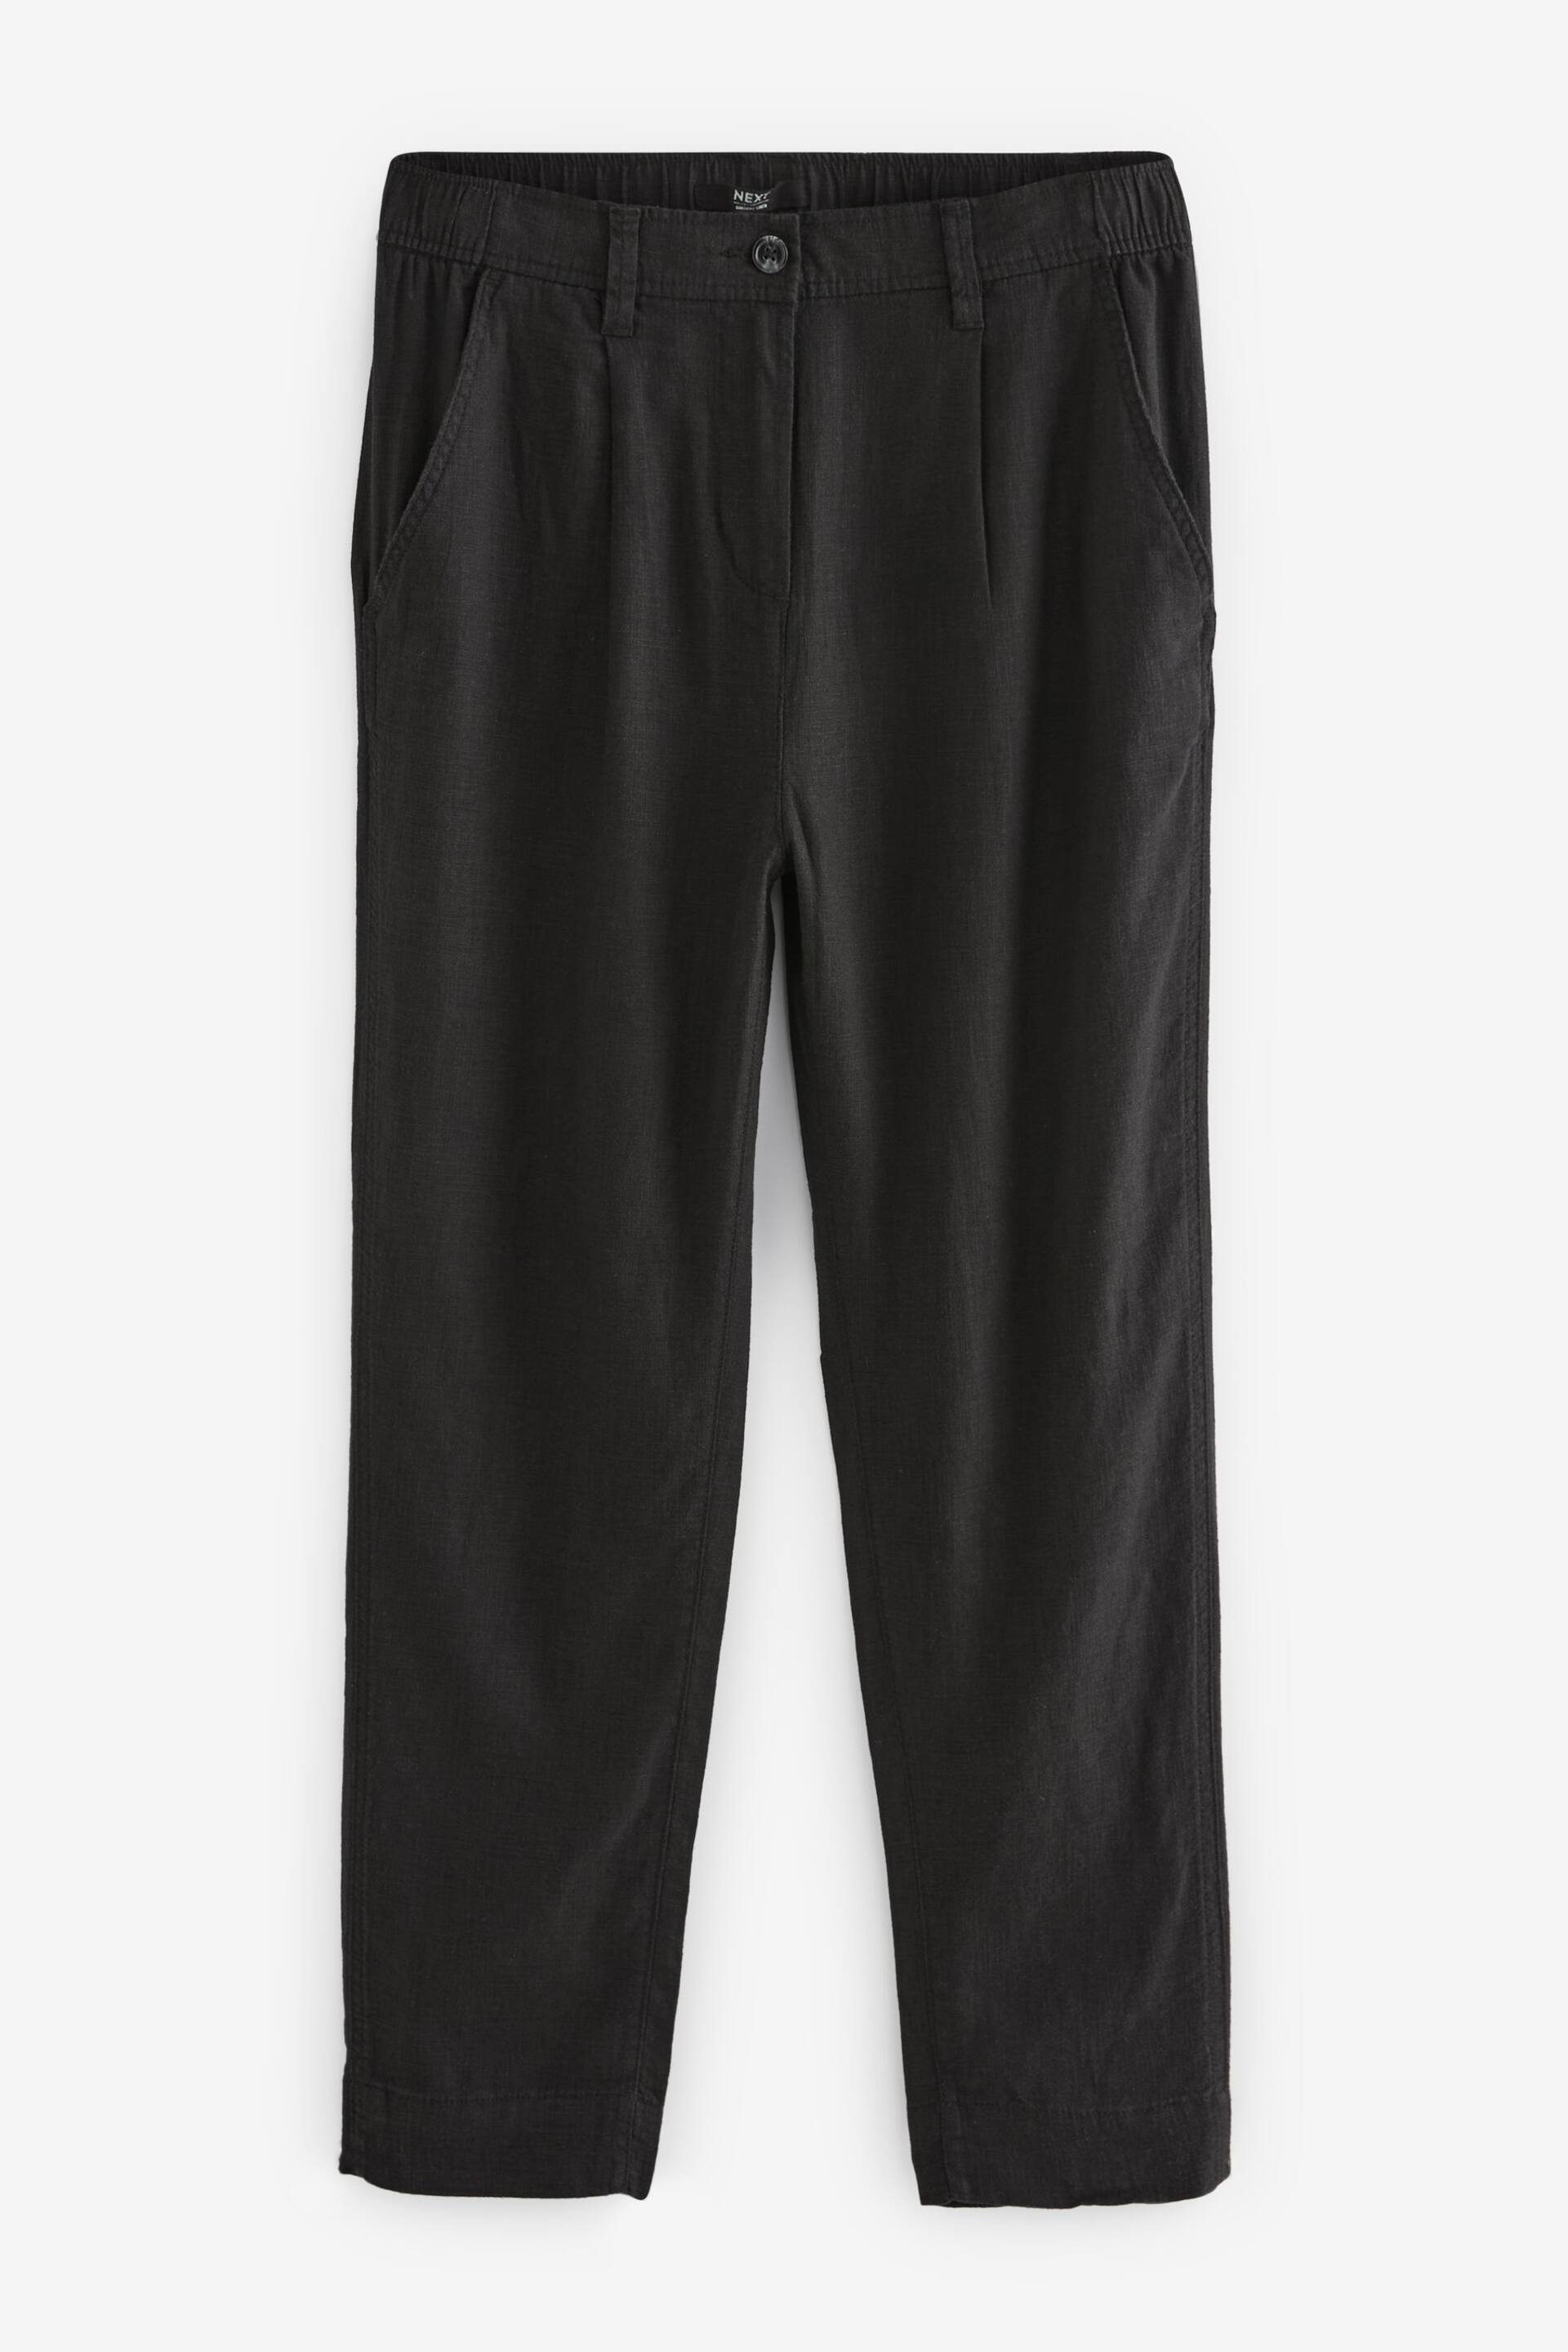 Black Linen Blend Taper Trousers - Image 6 of 7